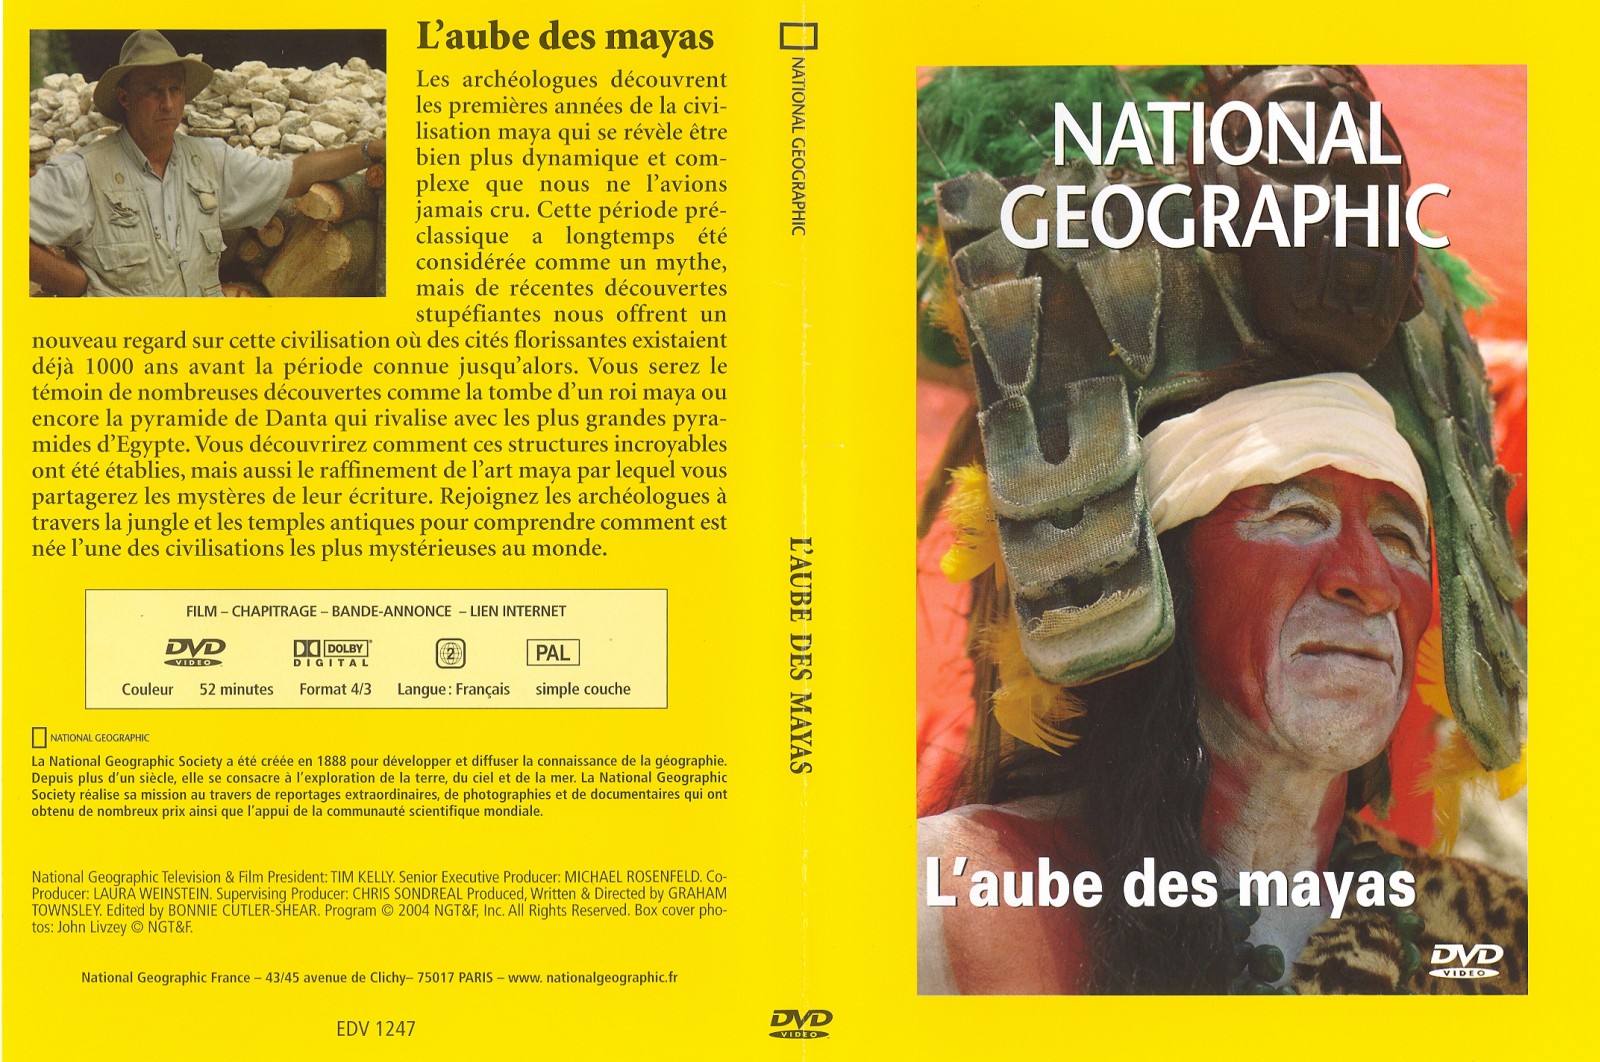 Jaquette DVD National Gographic - L